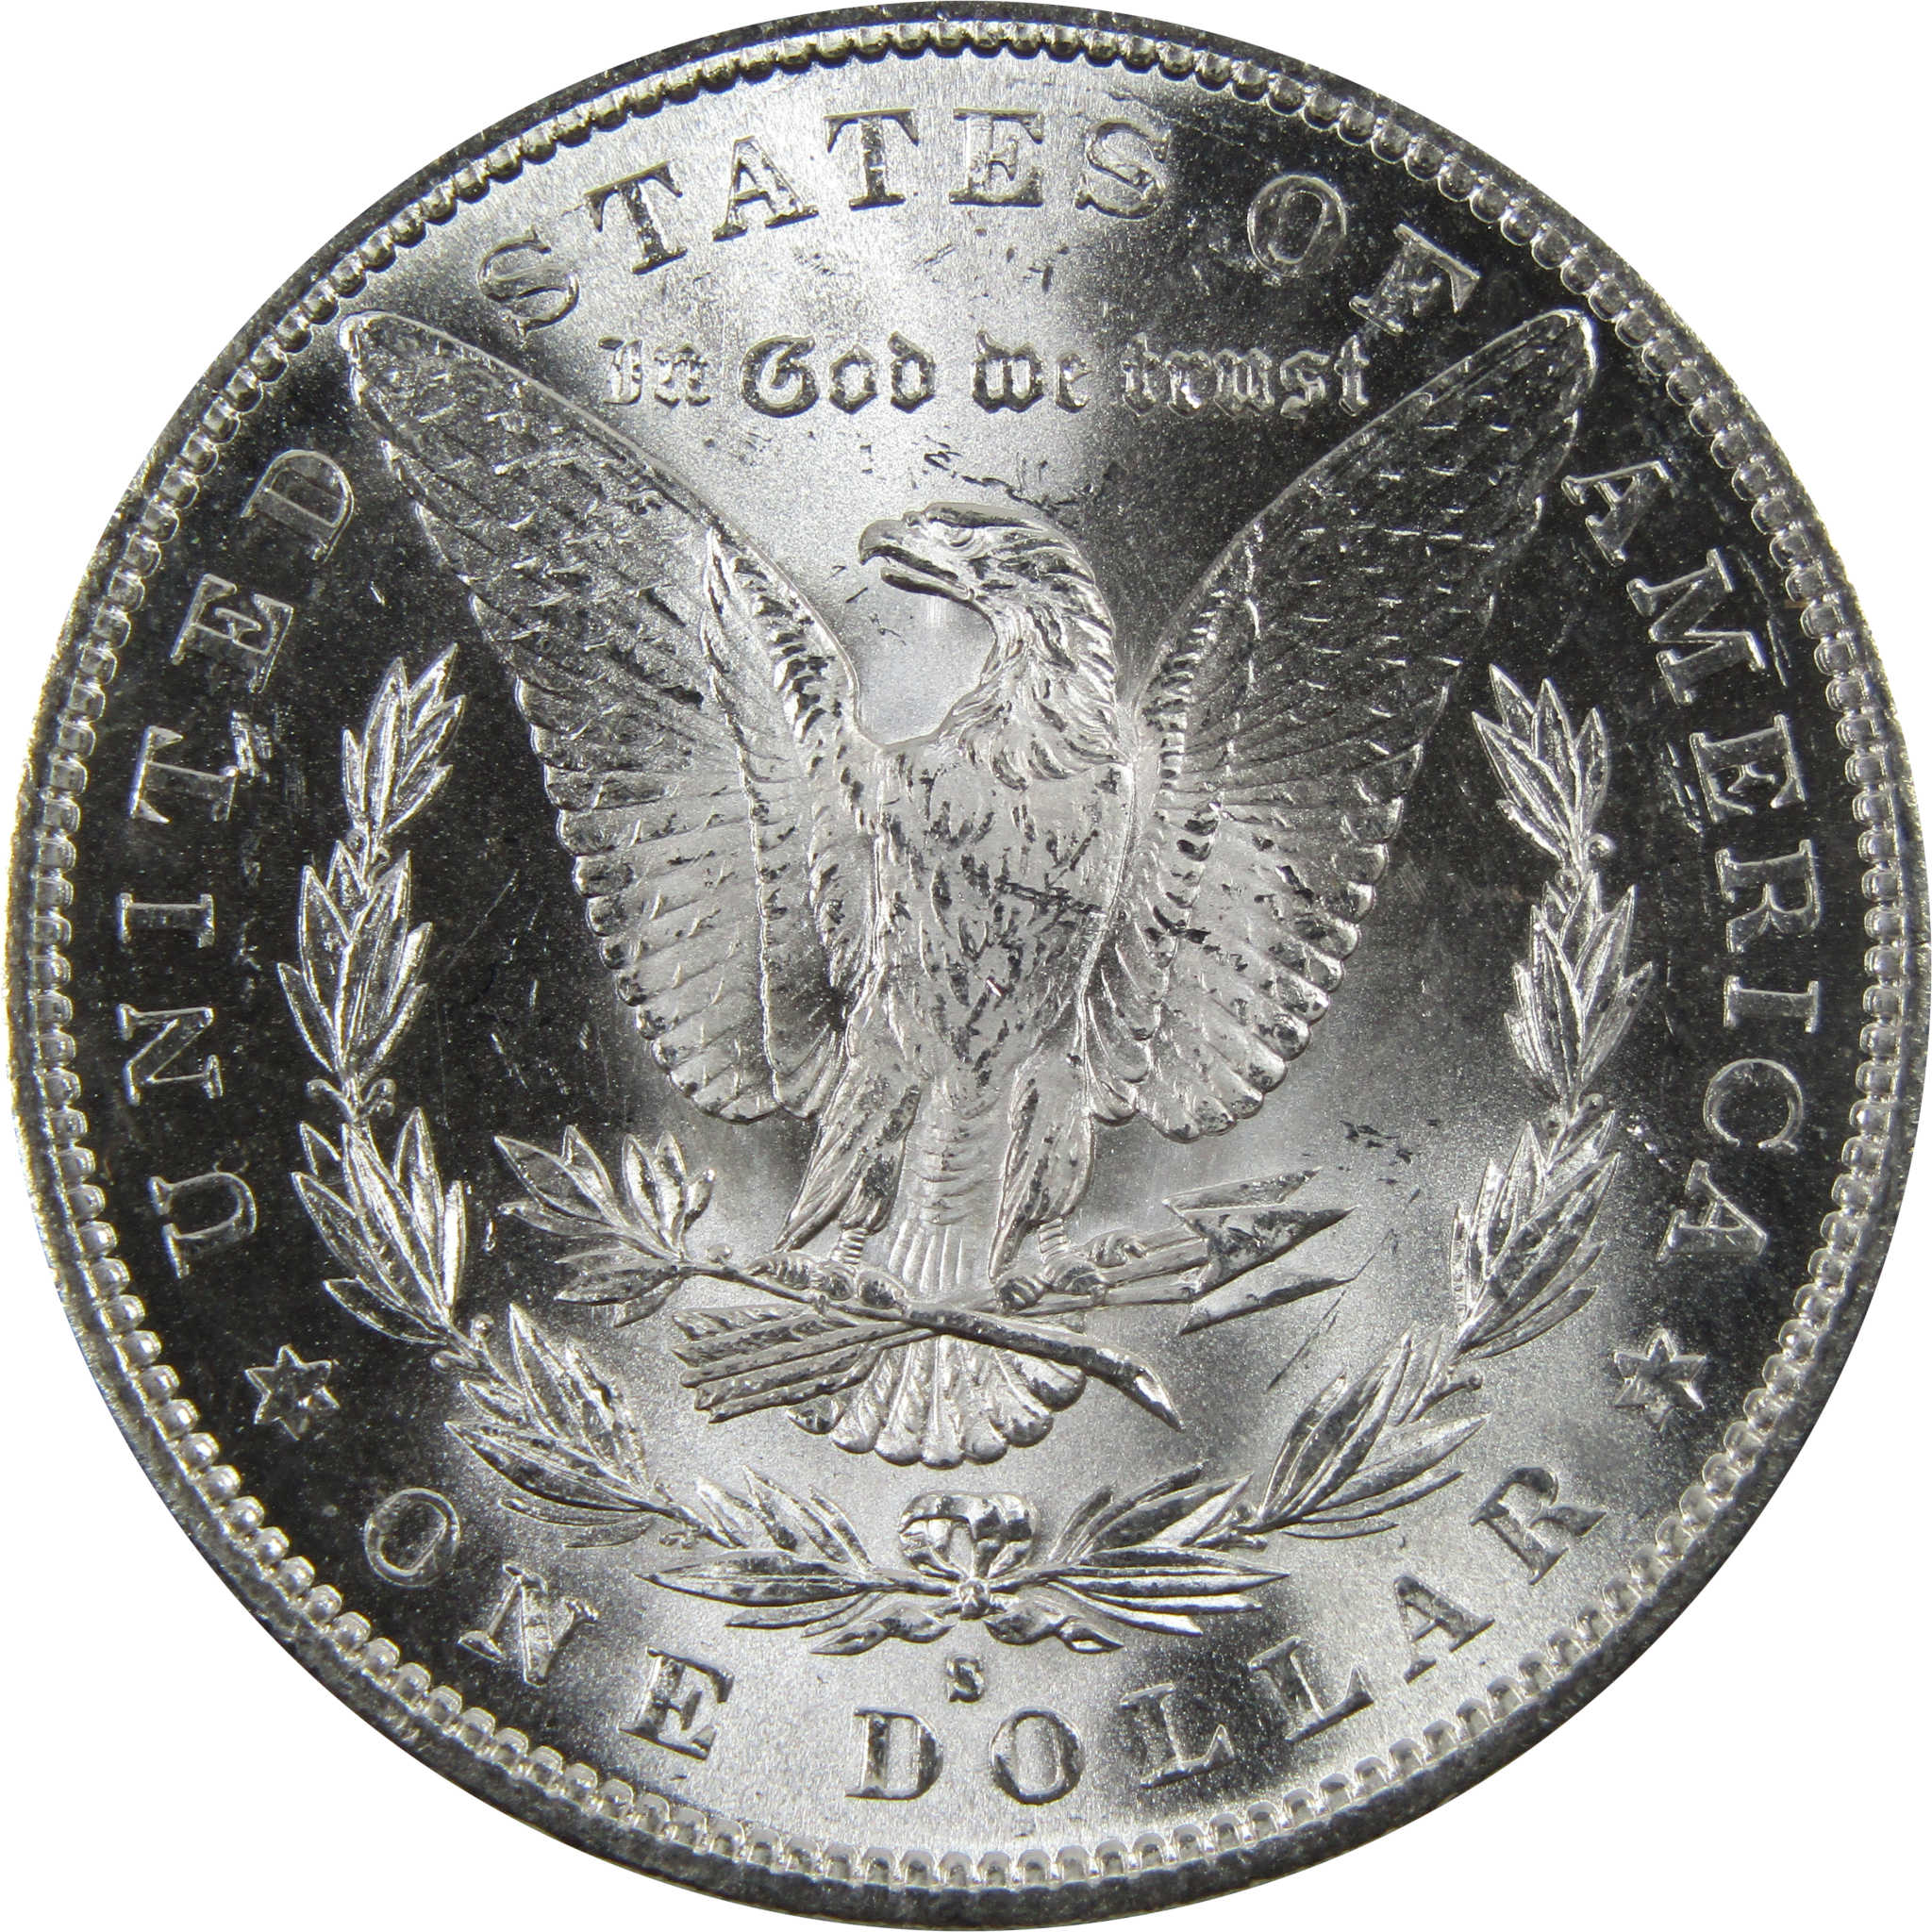 1890 S Morgan Dollar BU Uncirculated 90% Silver $1 Coin SKU:I4922 - Morgan coin - Morgan silver dollar - Morgan silver dollar for sale - Profile Coins &amp; Collectibles